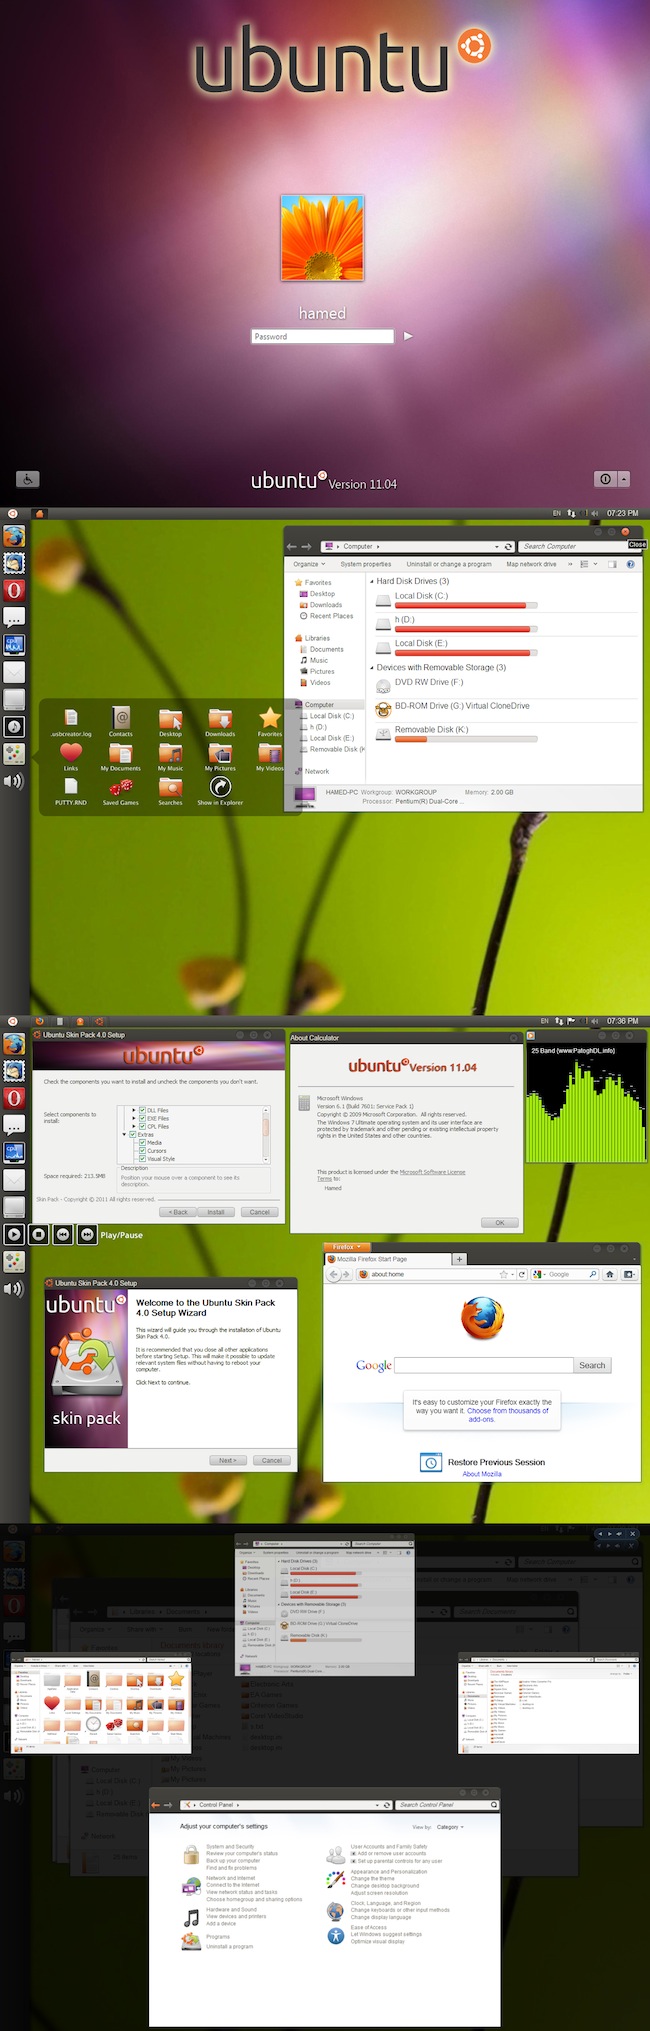 Capture d'écran de l'interface Ubuntu 11.04